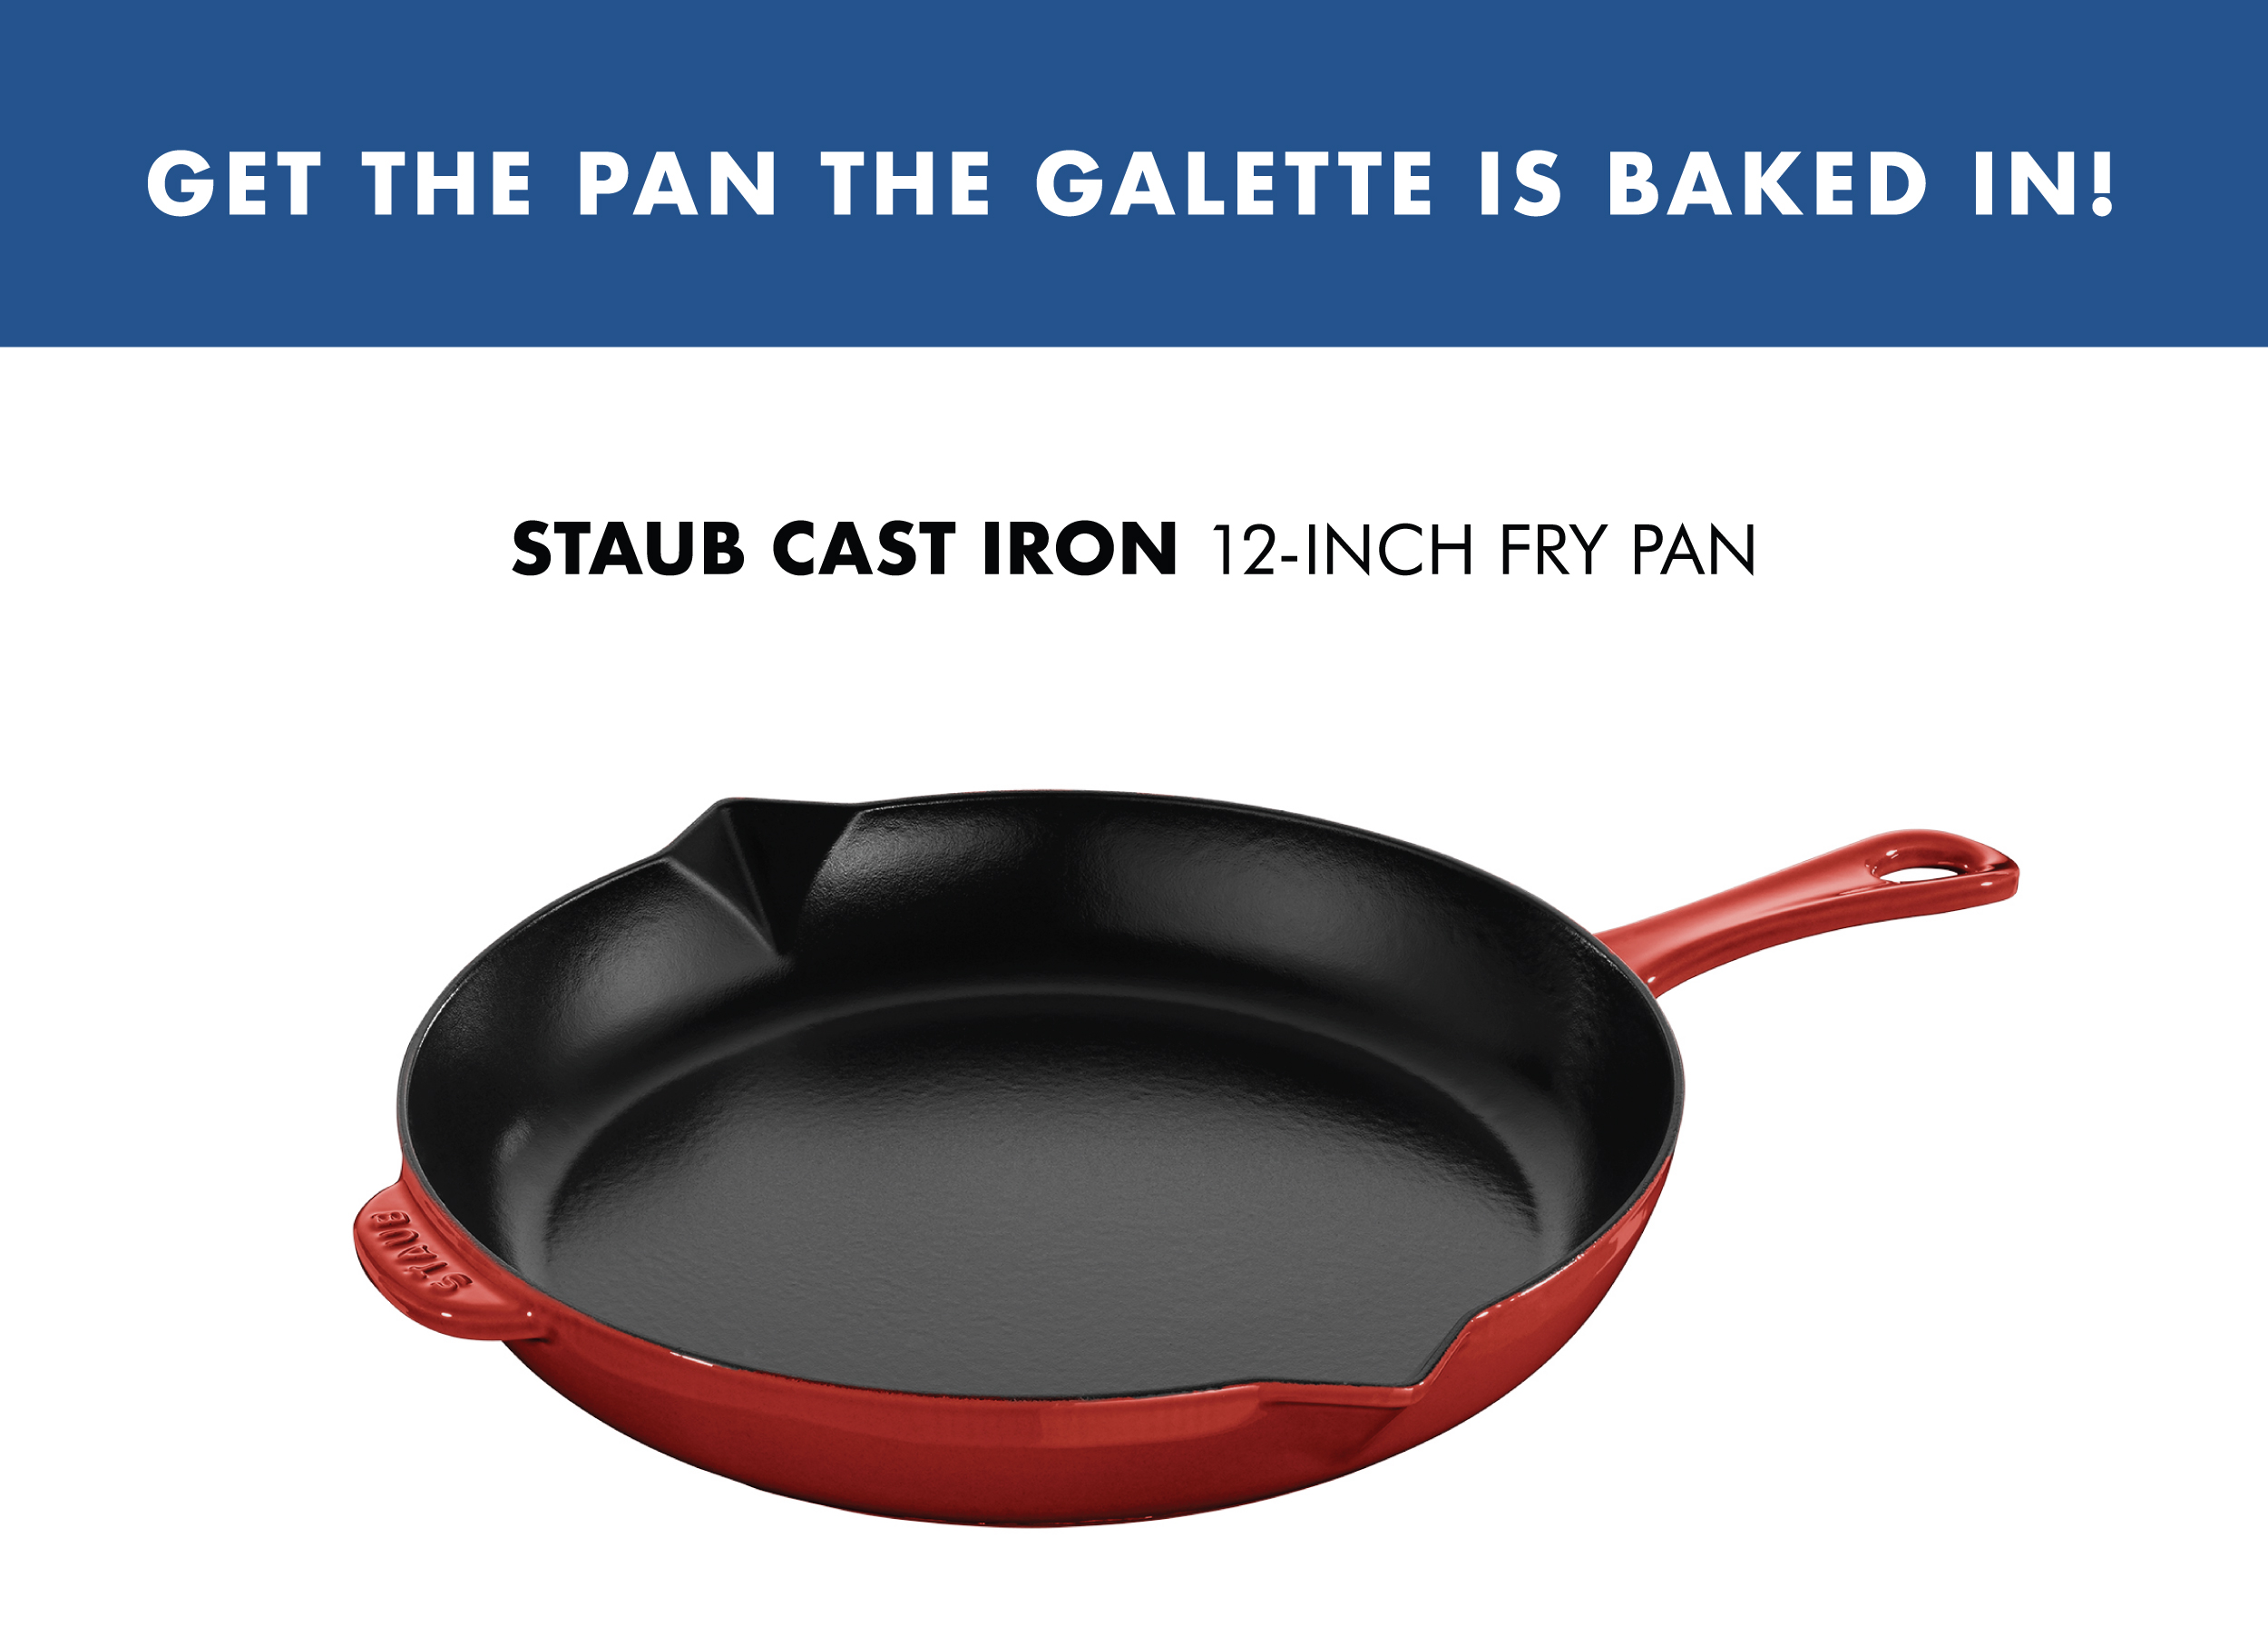 Get the Staub Fry Pan